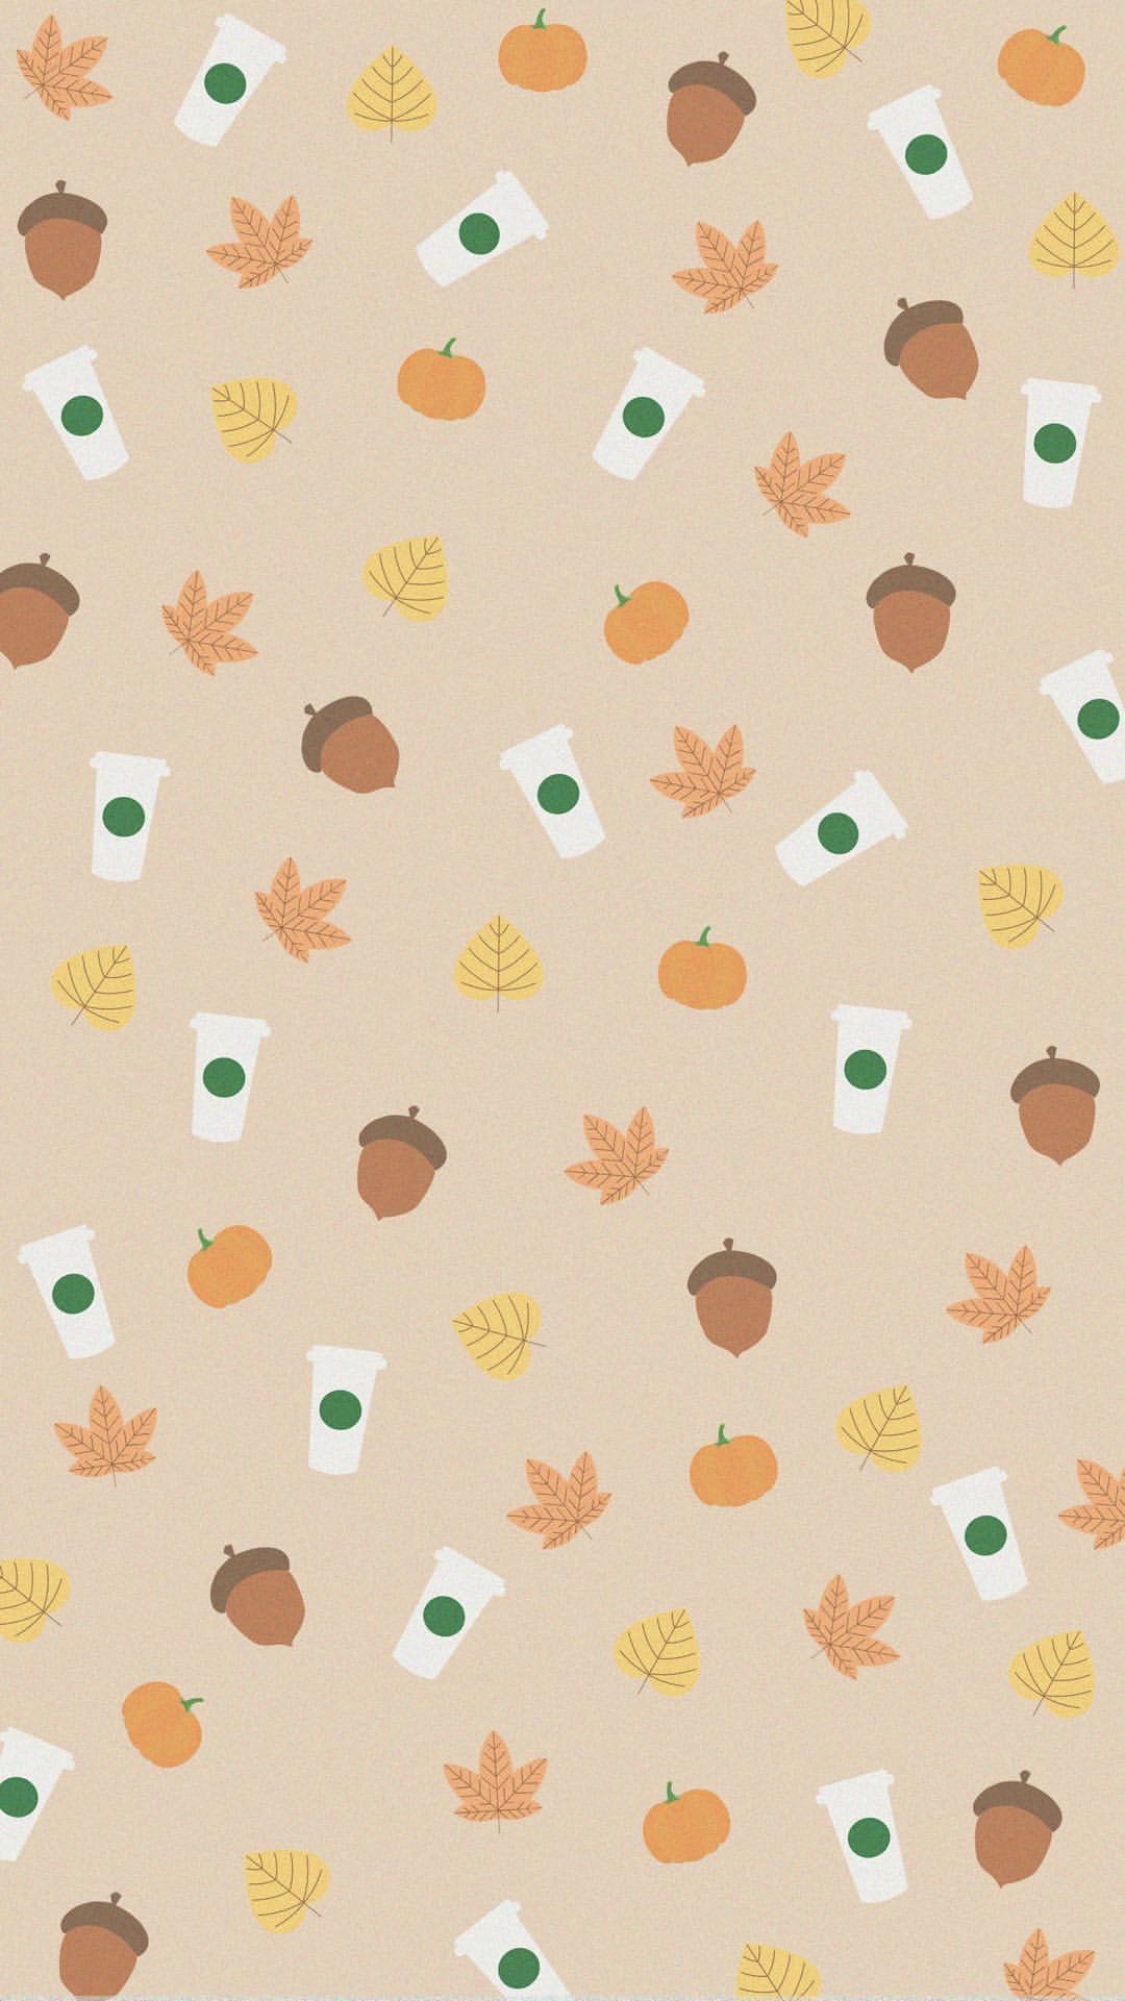 Starbucks background fall autumn wallpaper. Fall wallpaper, Starbucks background, iPhone wallpaper fall